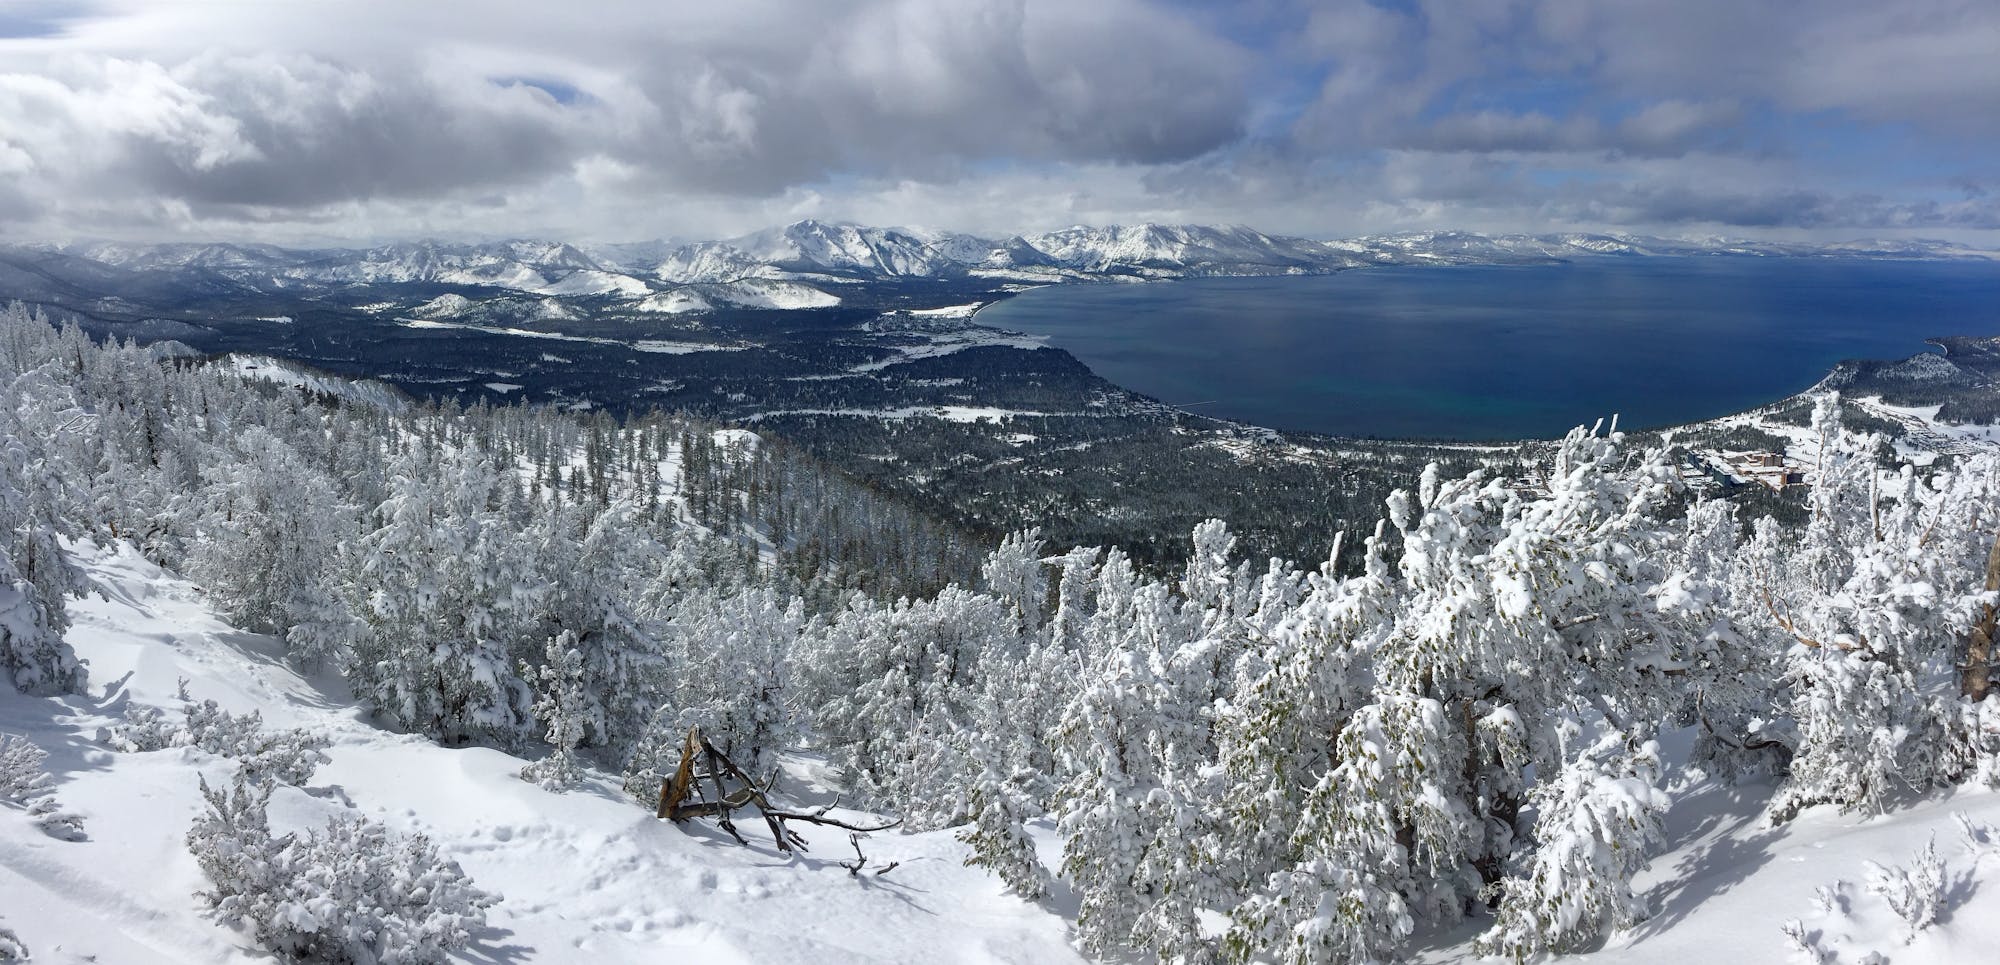 2017 Epic Winter Heavenly Mountain Resort Lake Tahoe, California